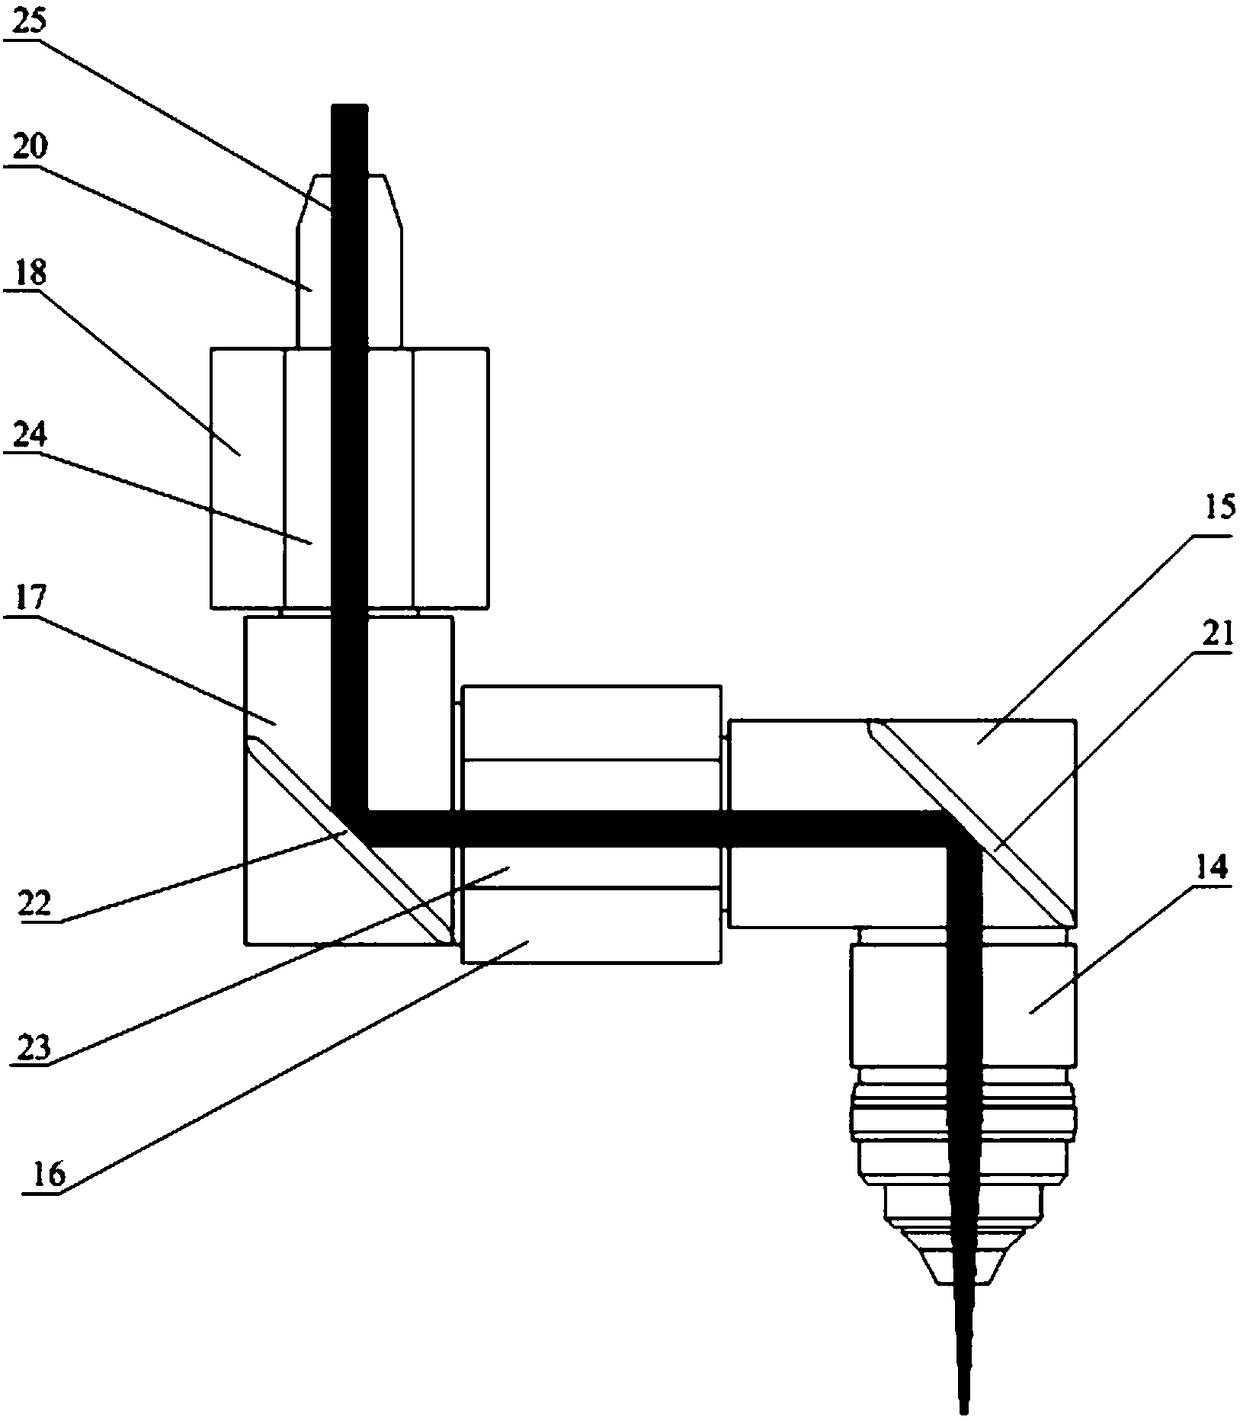 Five-axis linkage laser 3D (Three Dimensional) metal printer